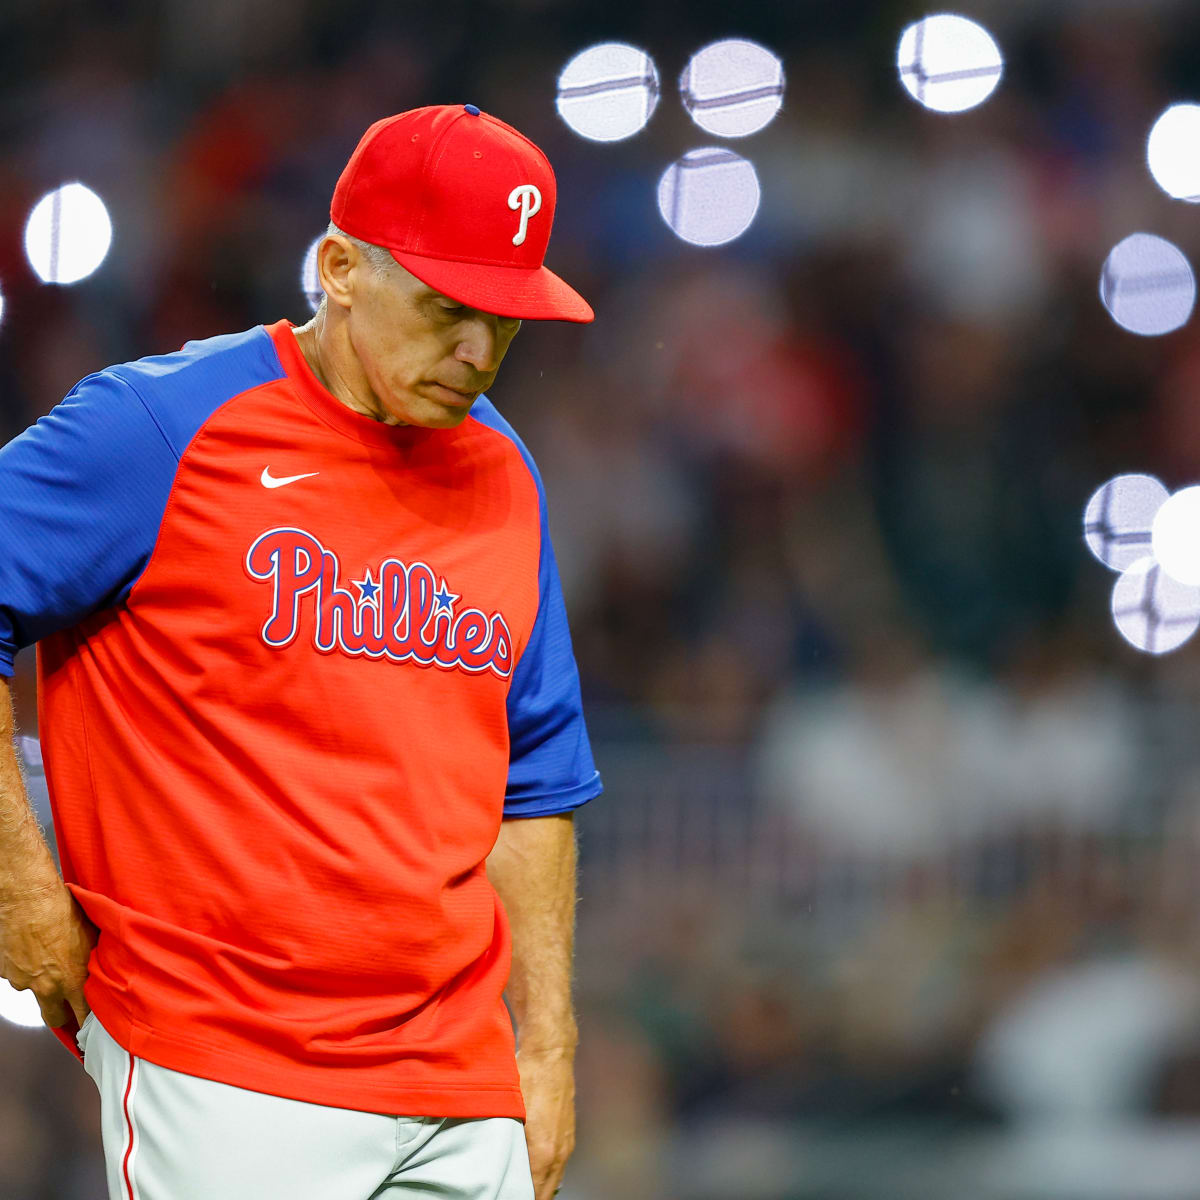 Joe Girardi Reacts to Phillies Firing, Will 'Pray That They Get Better